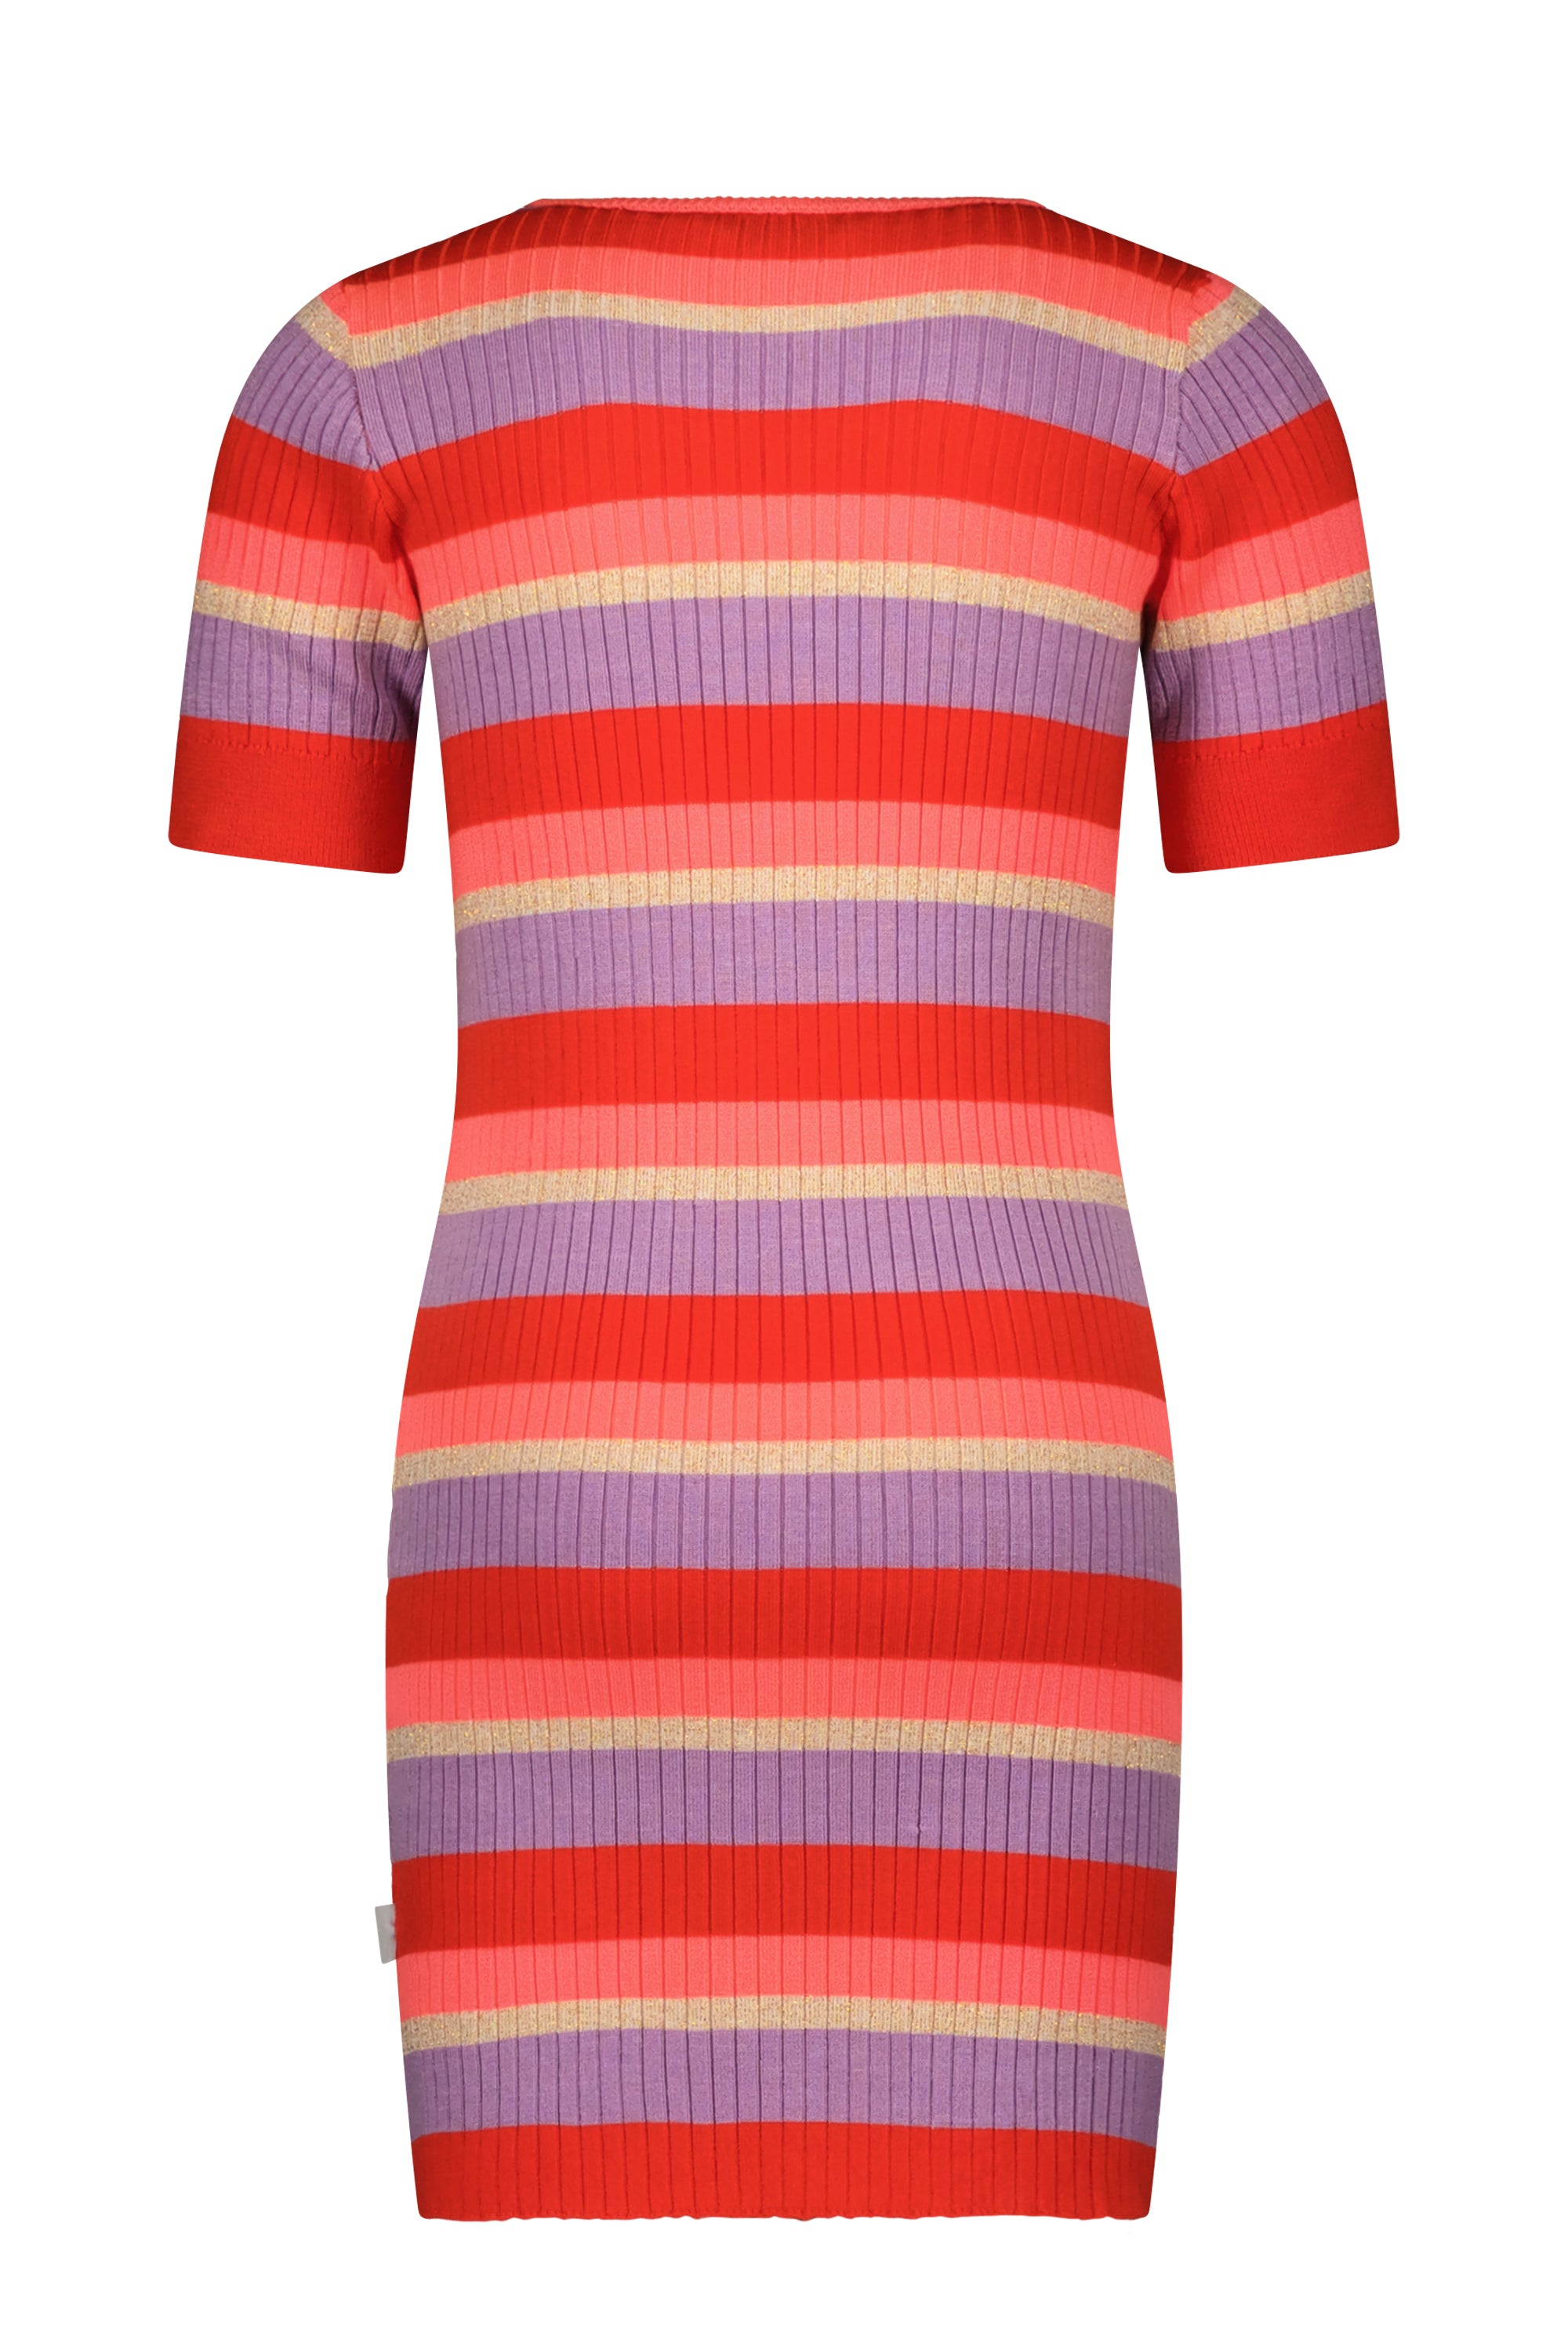 Moodstreet MT Knitted Striped Dress